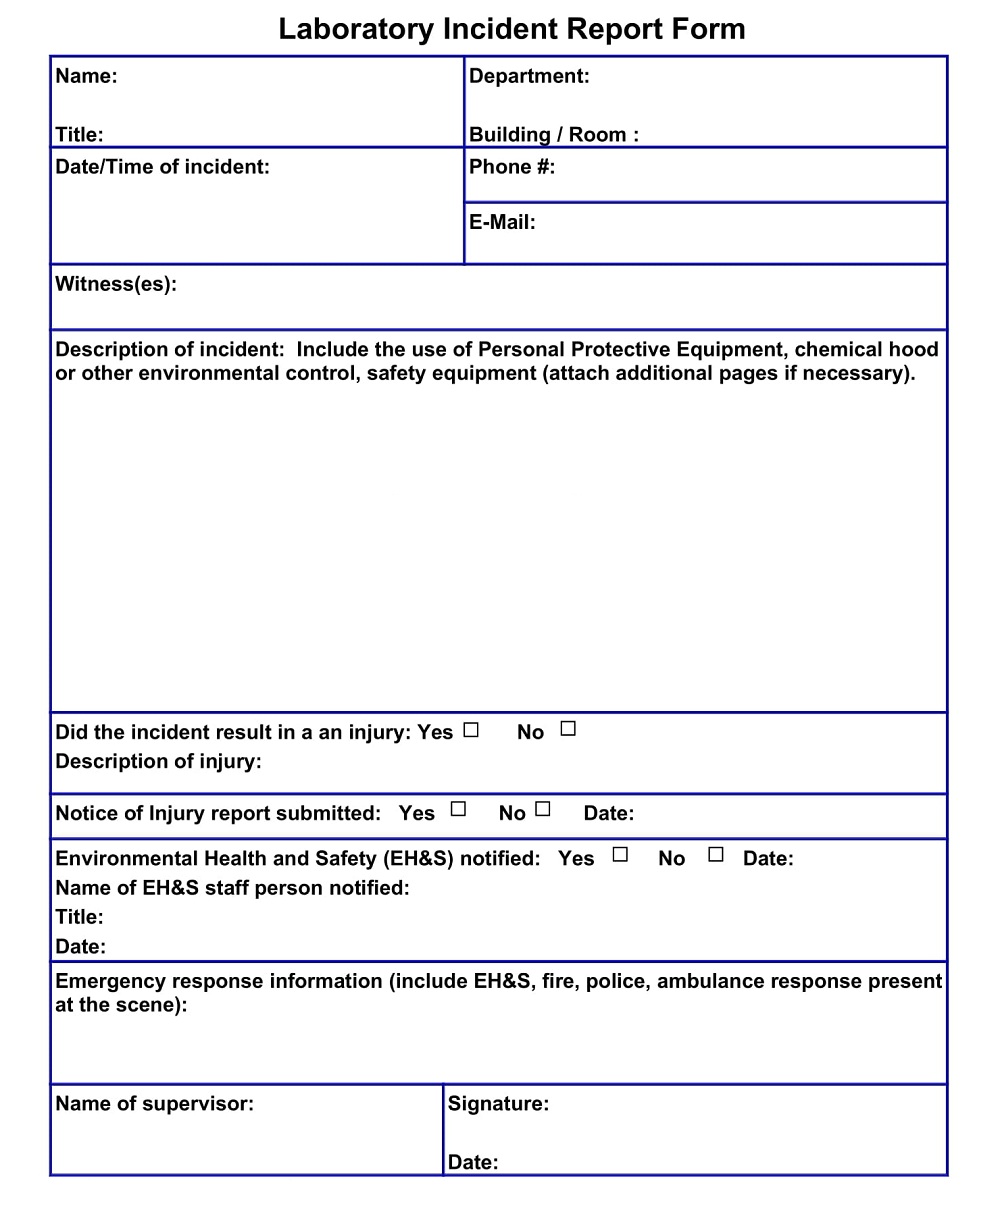 Lab Incident Report Form